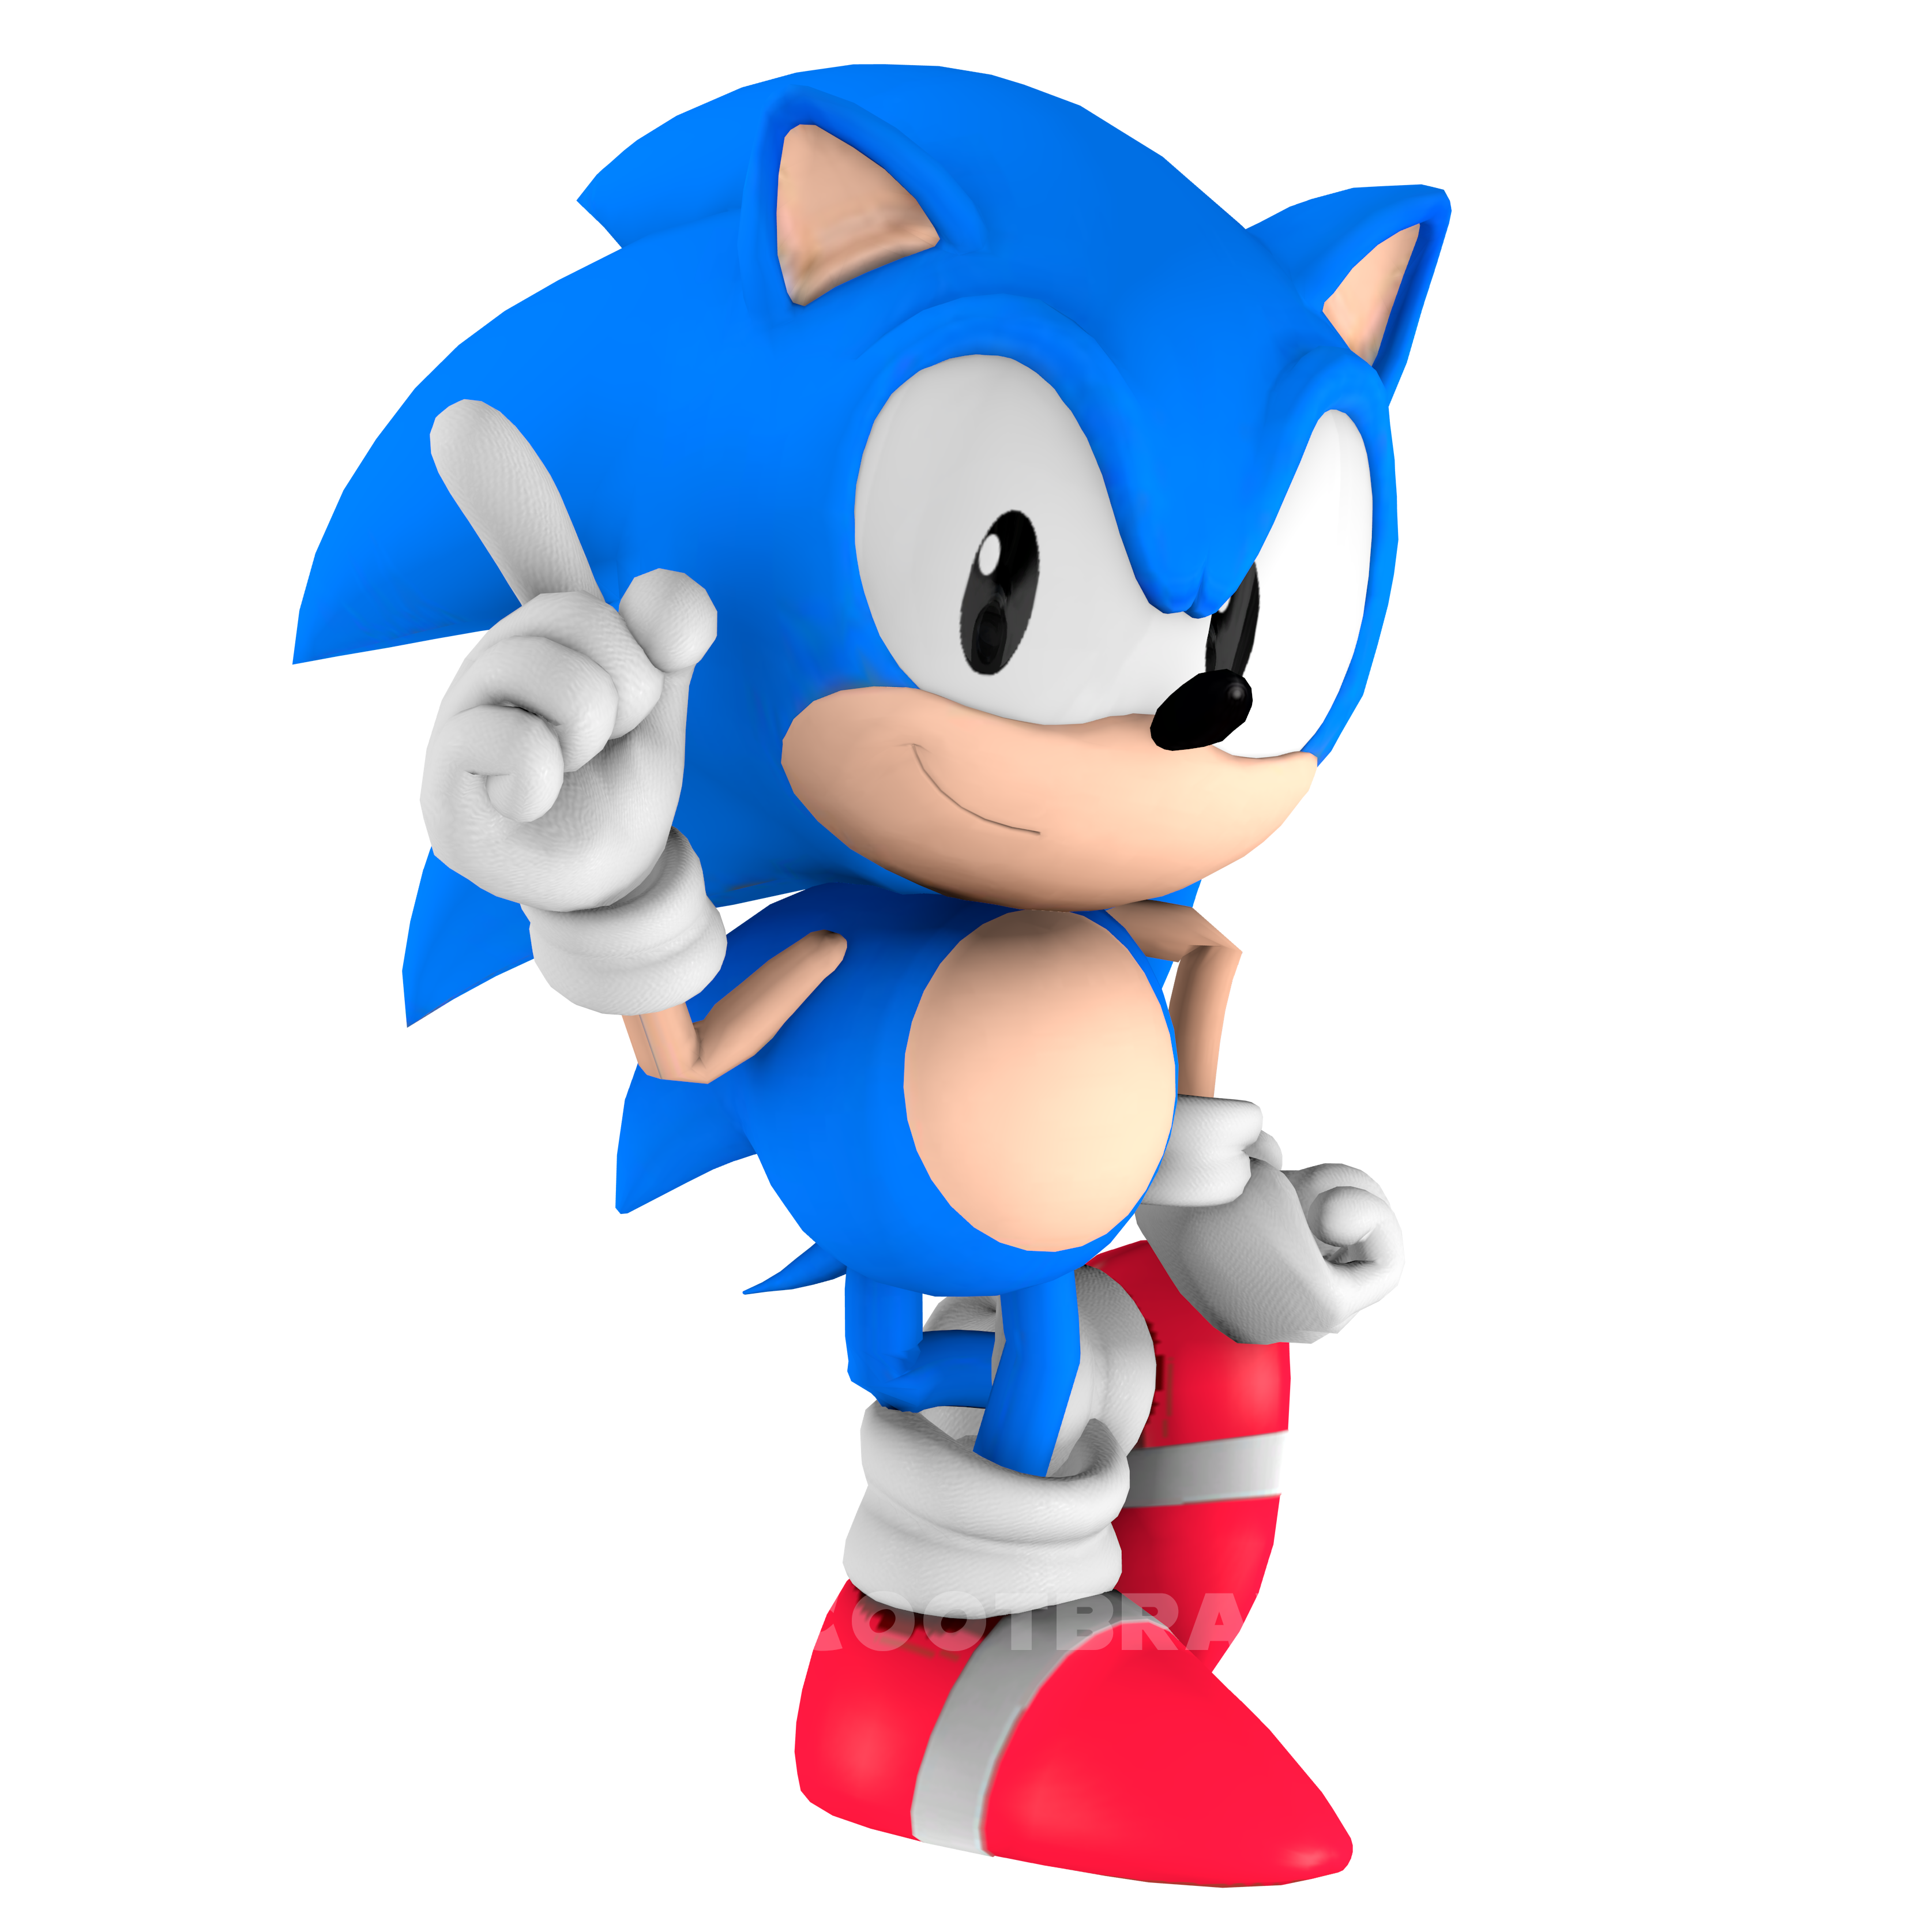 Classic Sonic May 2023 Render by bandicootbrawl96 on DeviantArt